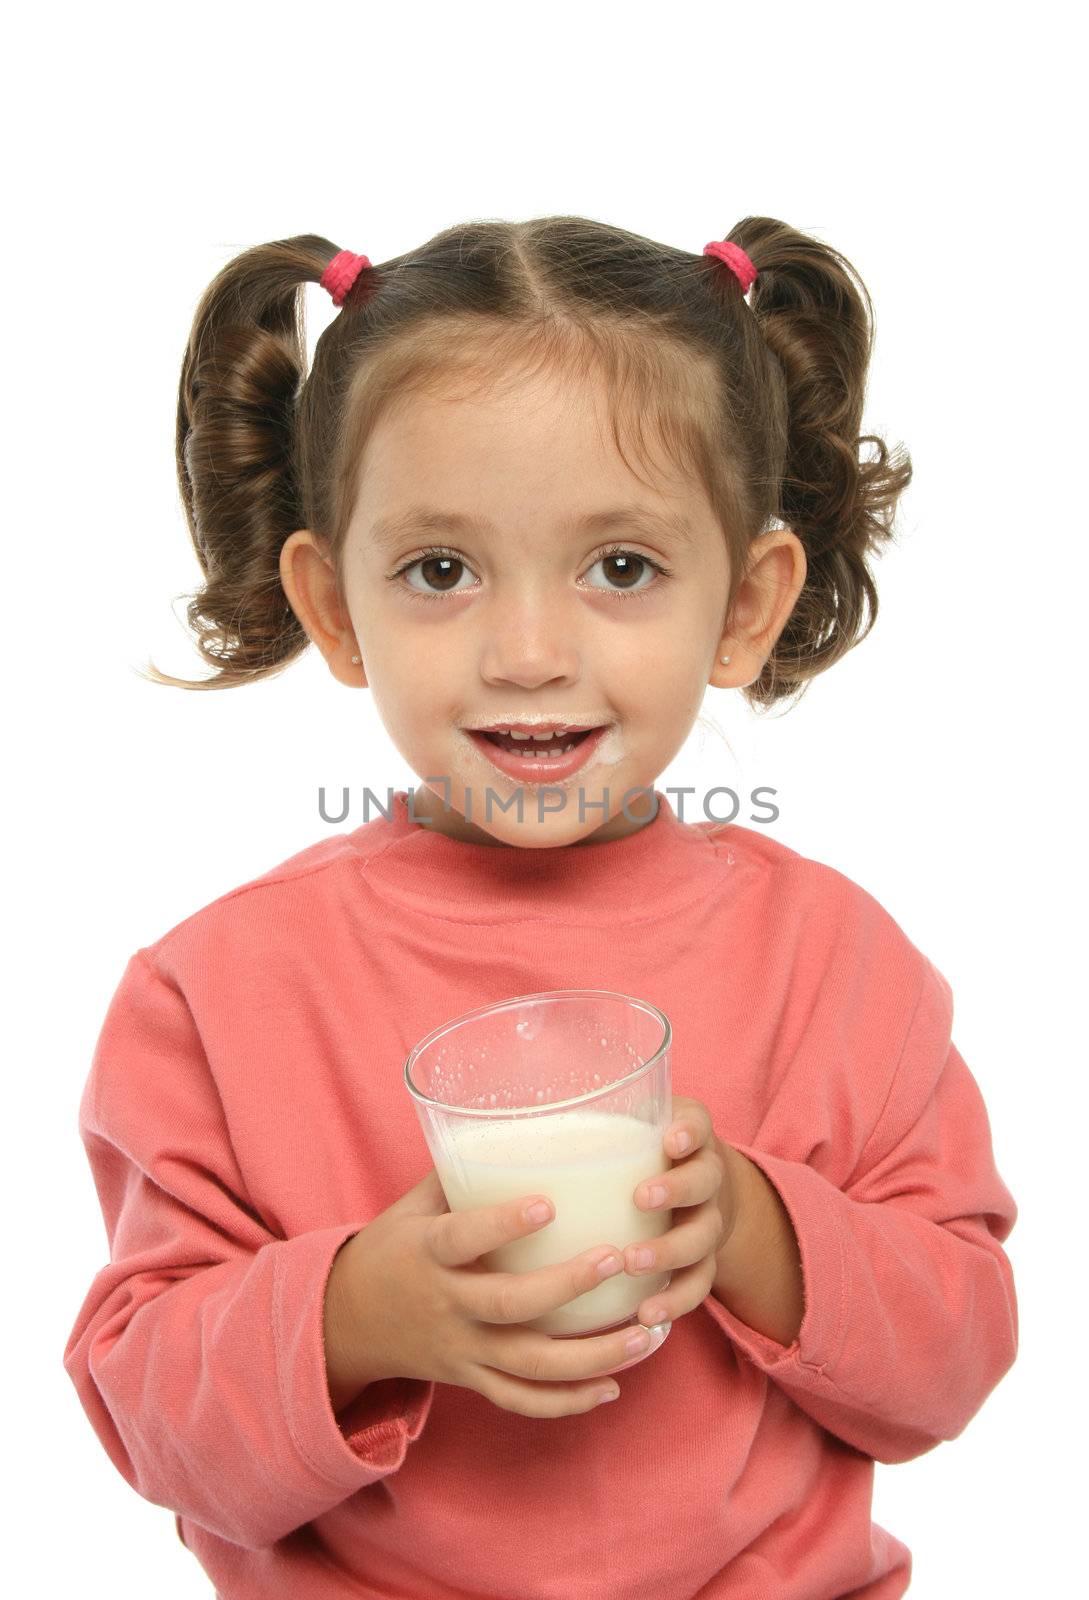 Toddler enjoying a glass of fresh milk